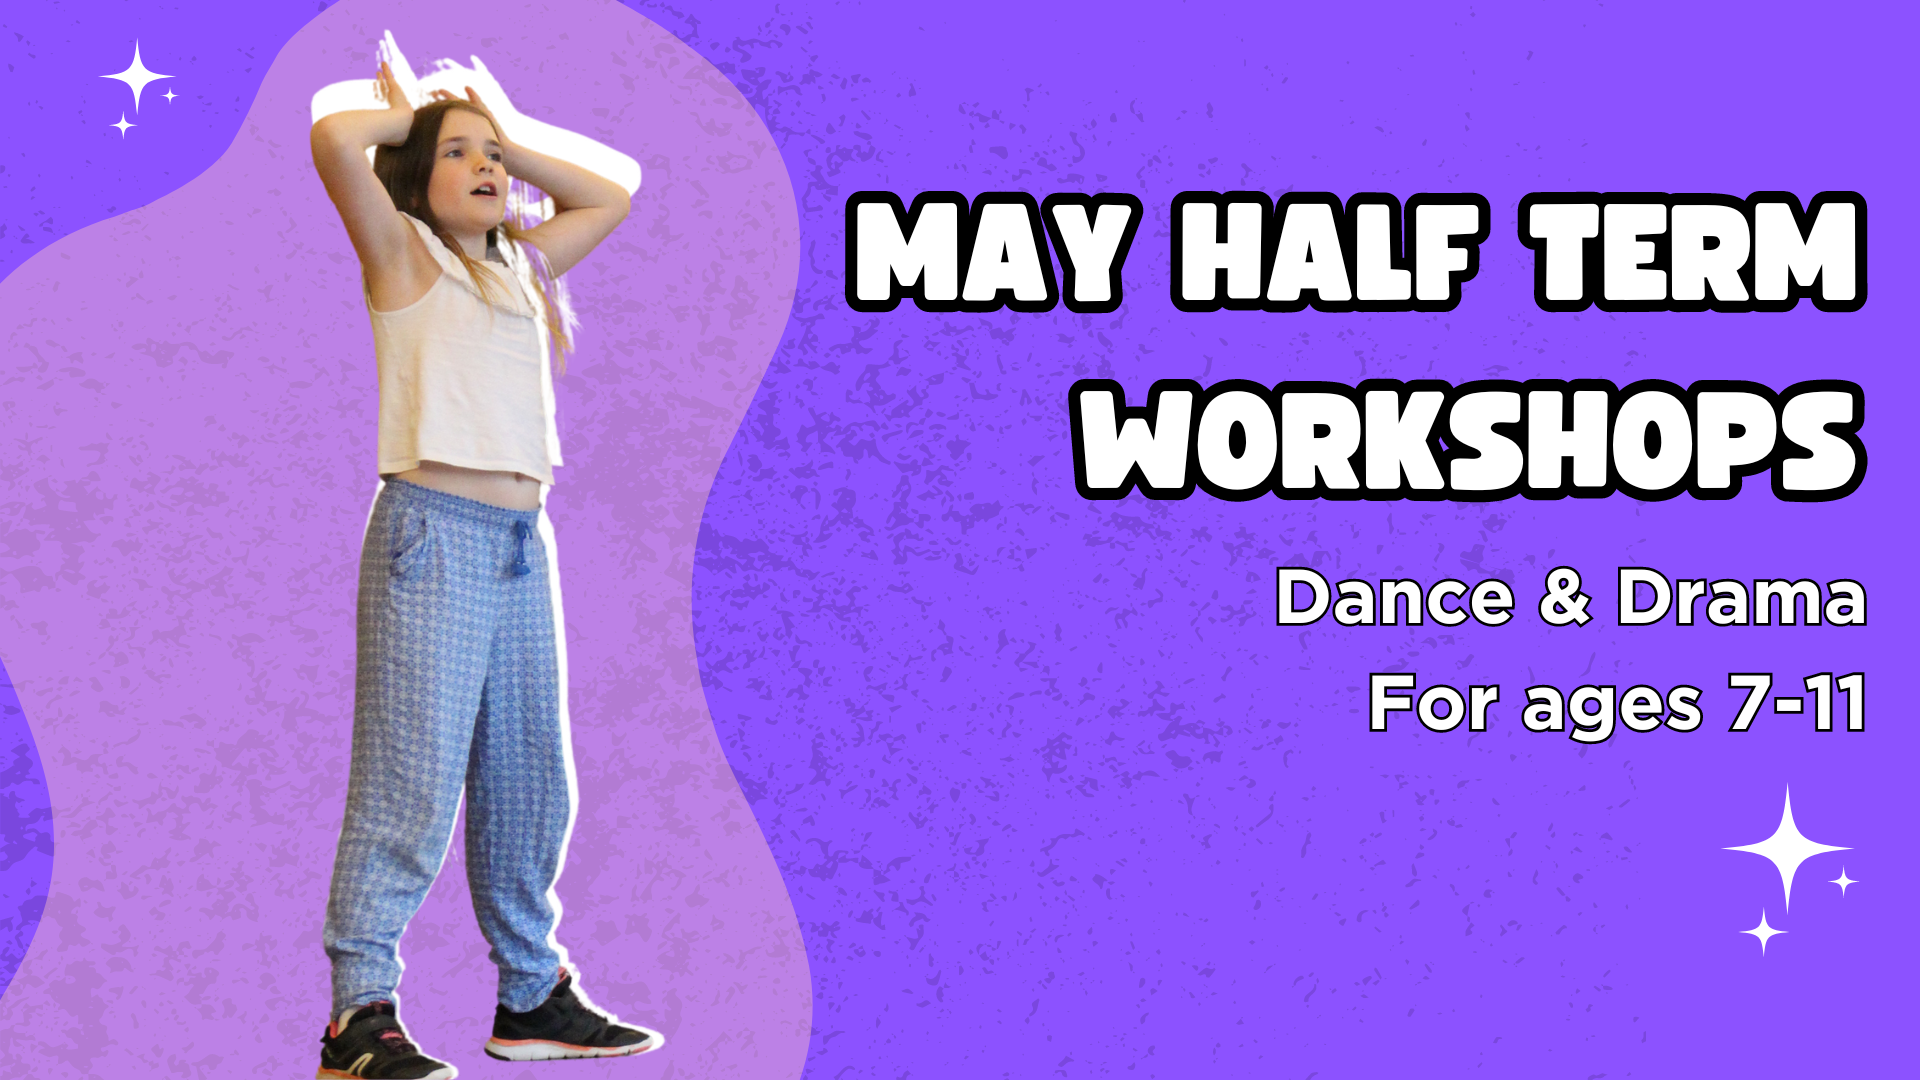 May Half Term Workshops - Dance & Drama hero